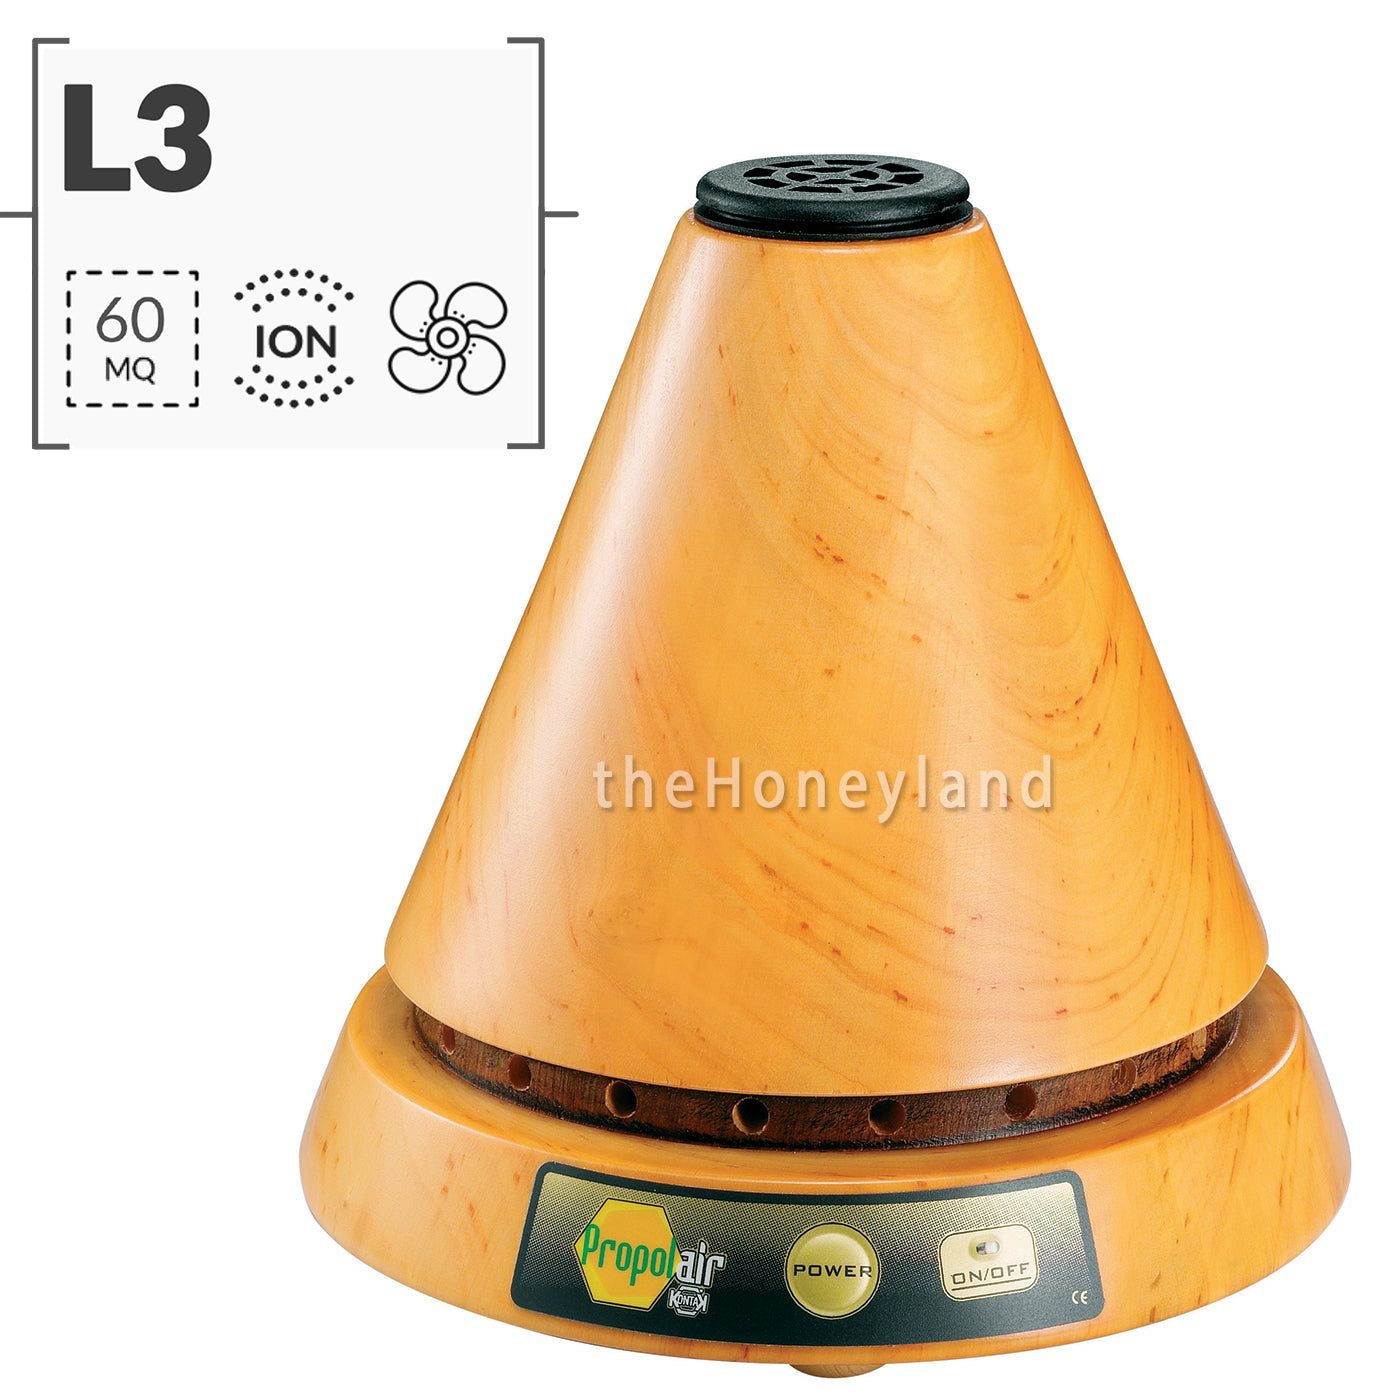 Propolair Wooden Propolis Diffuser L3 - Ionizer and Fan